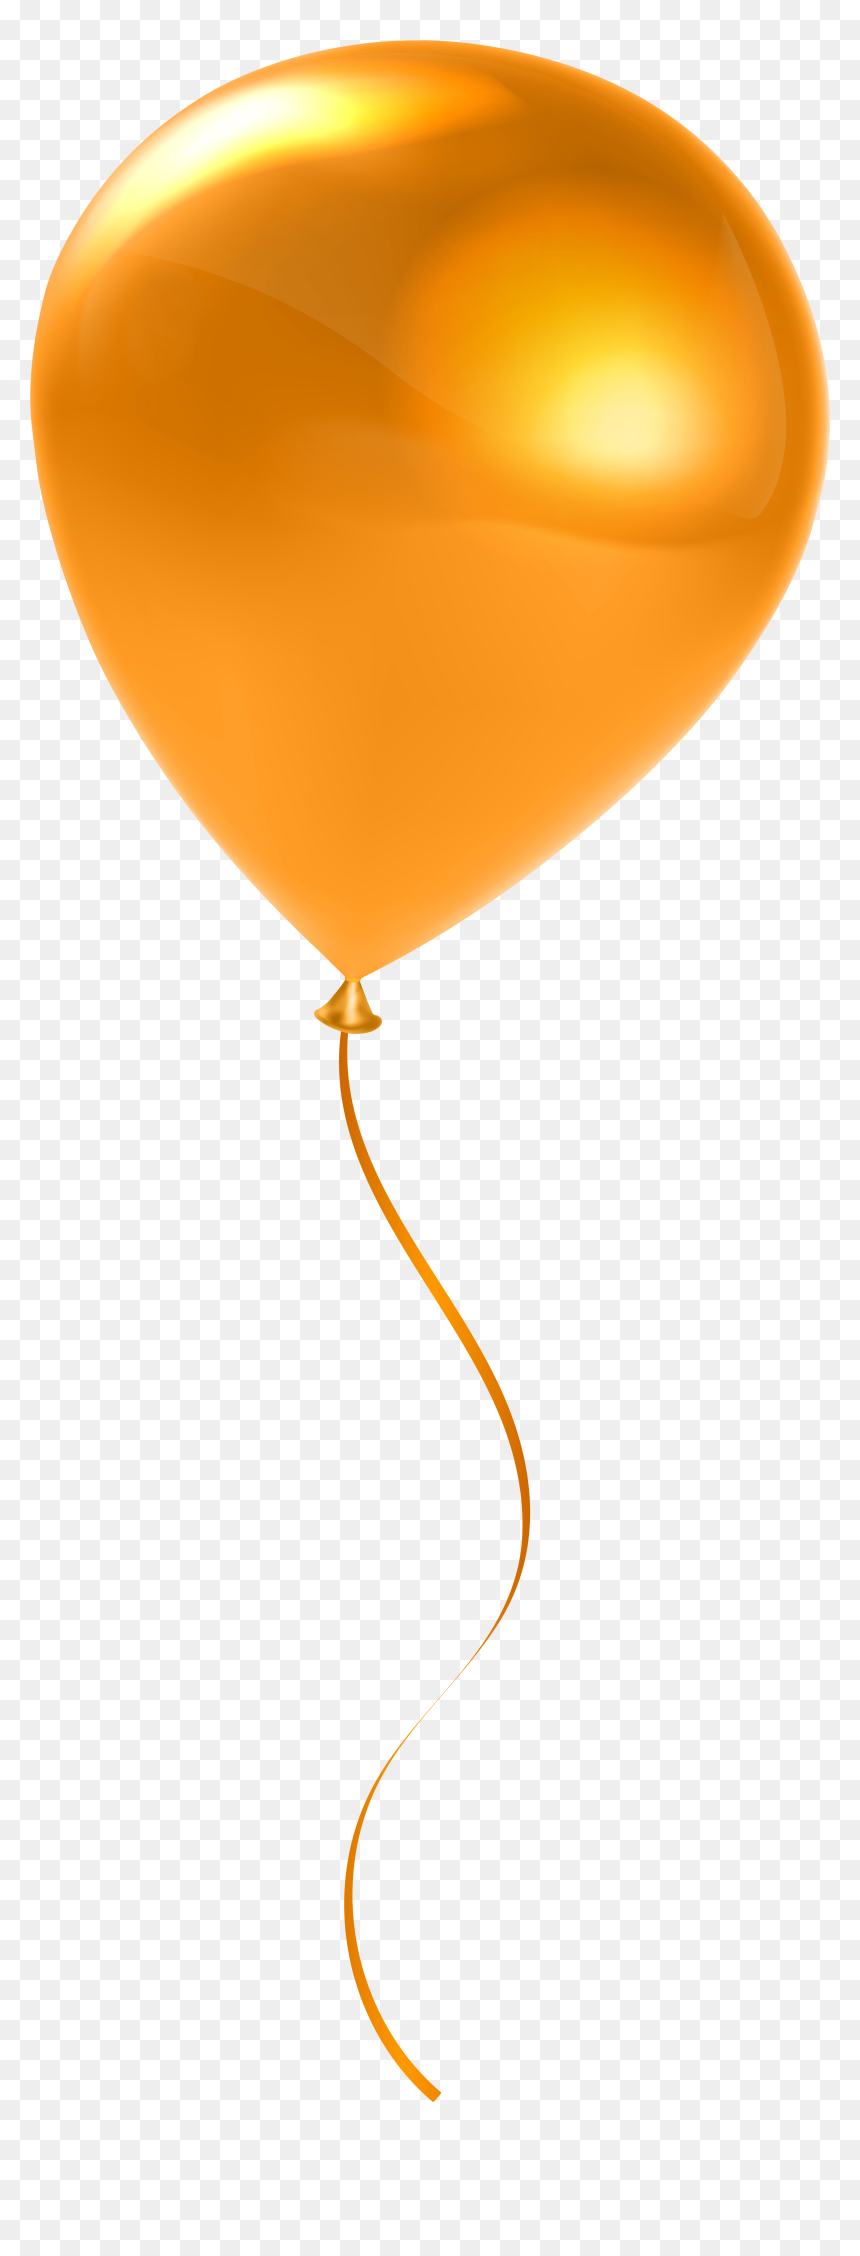 Free Orange Balloon Clip Art - Transparent Background Balloon - Clip ...